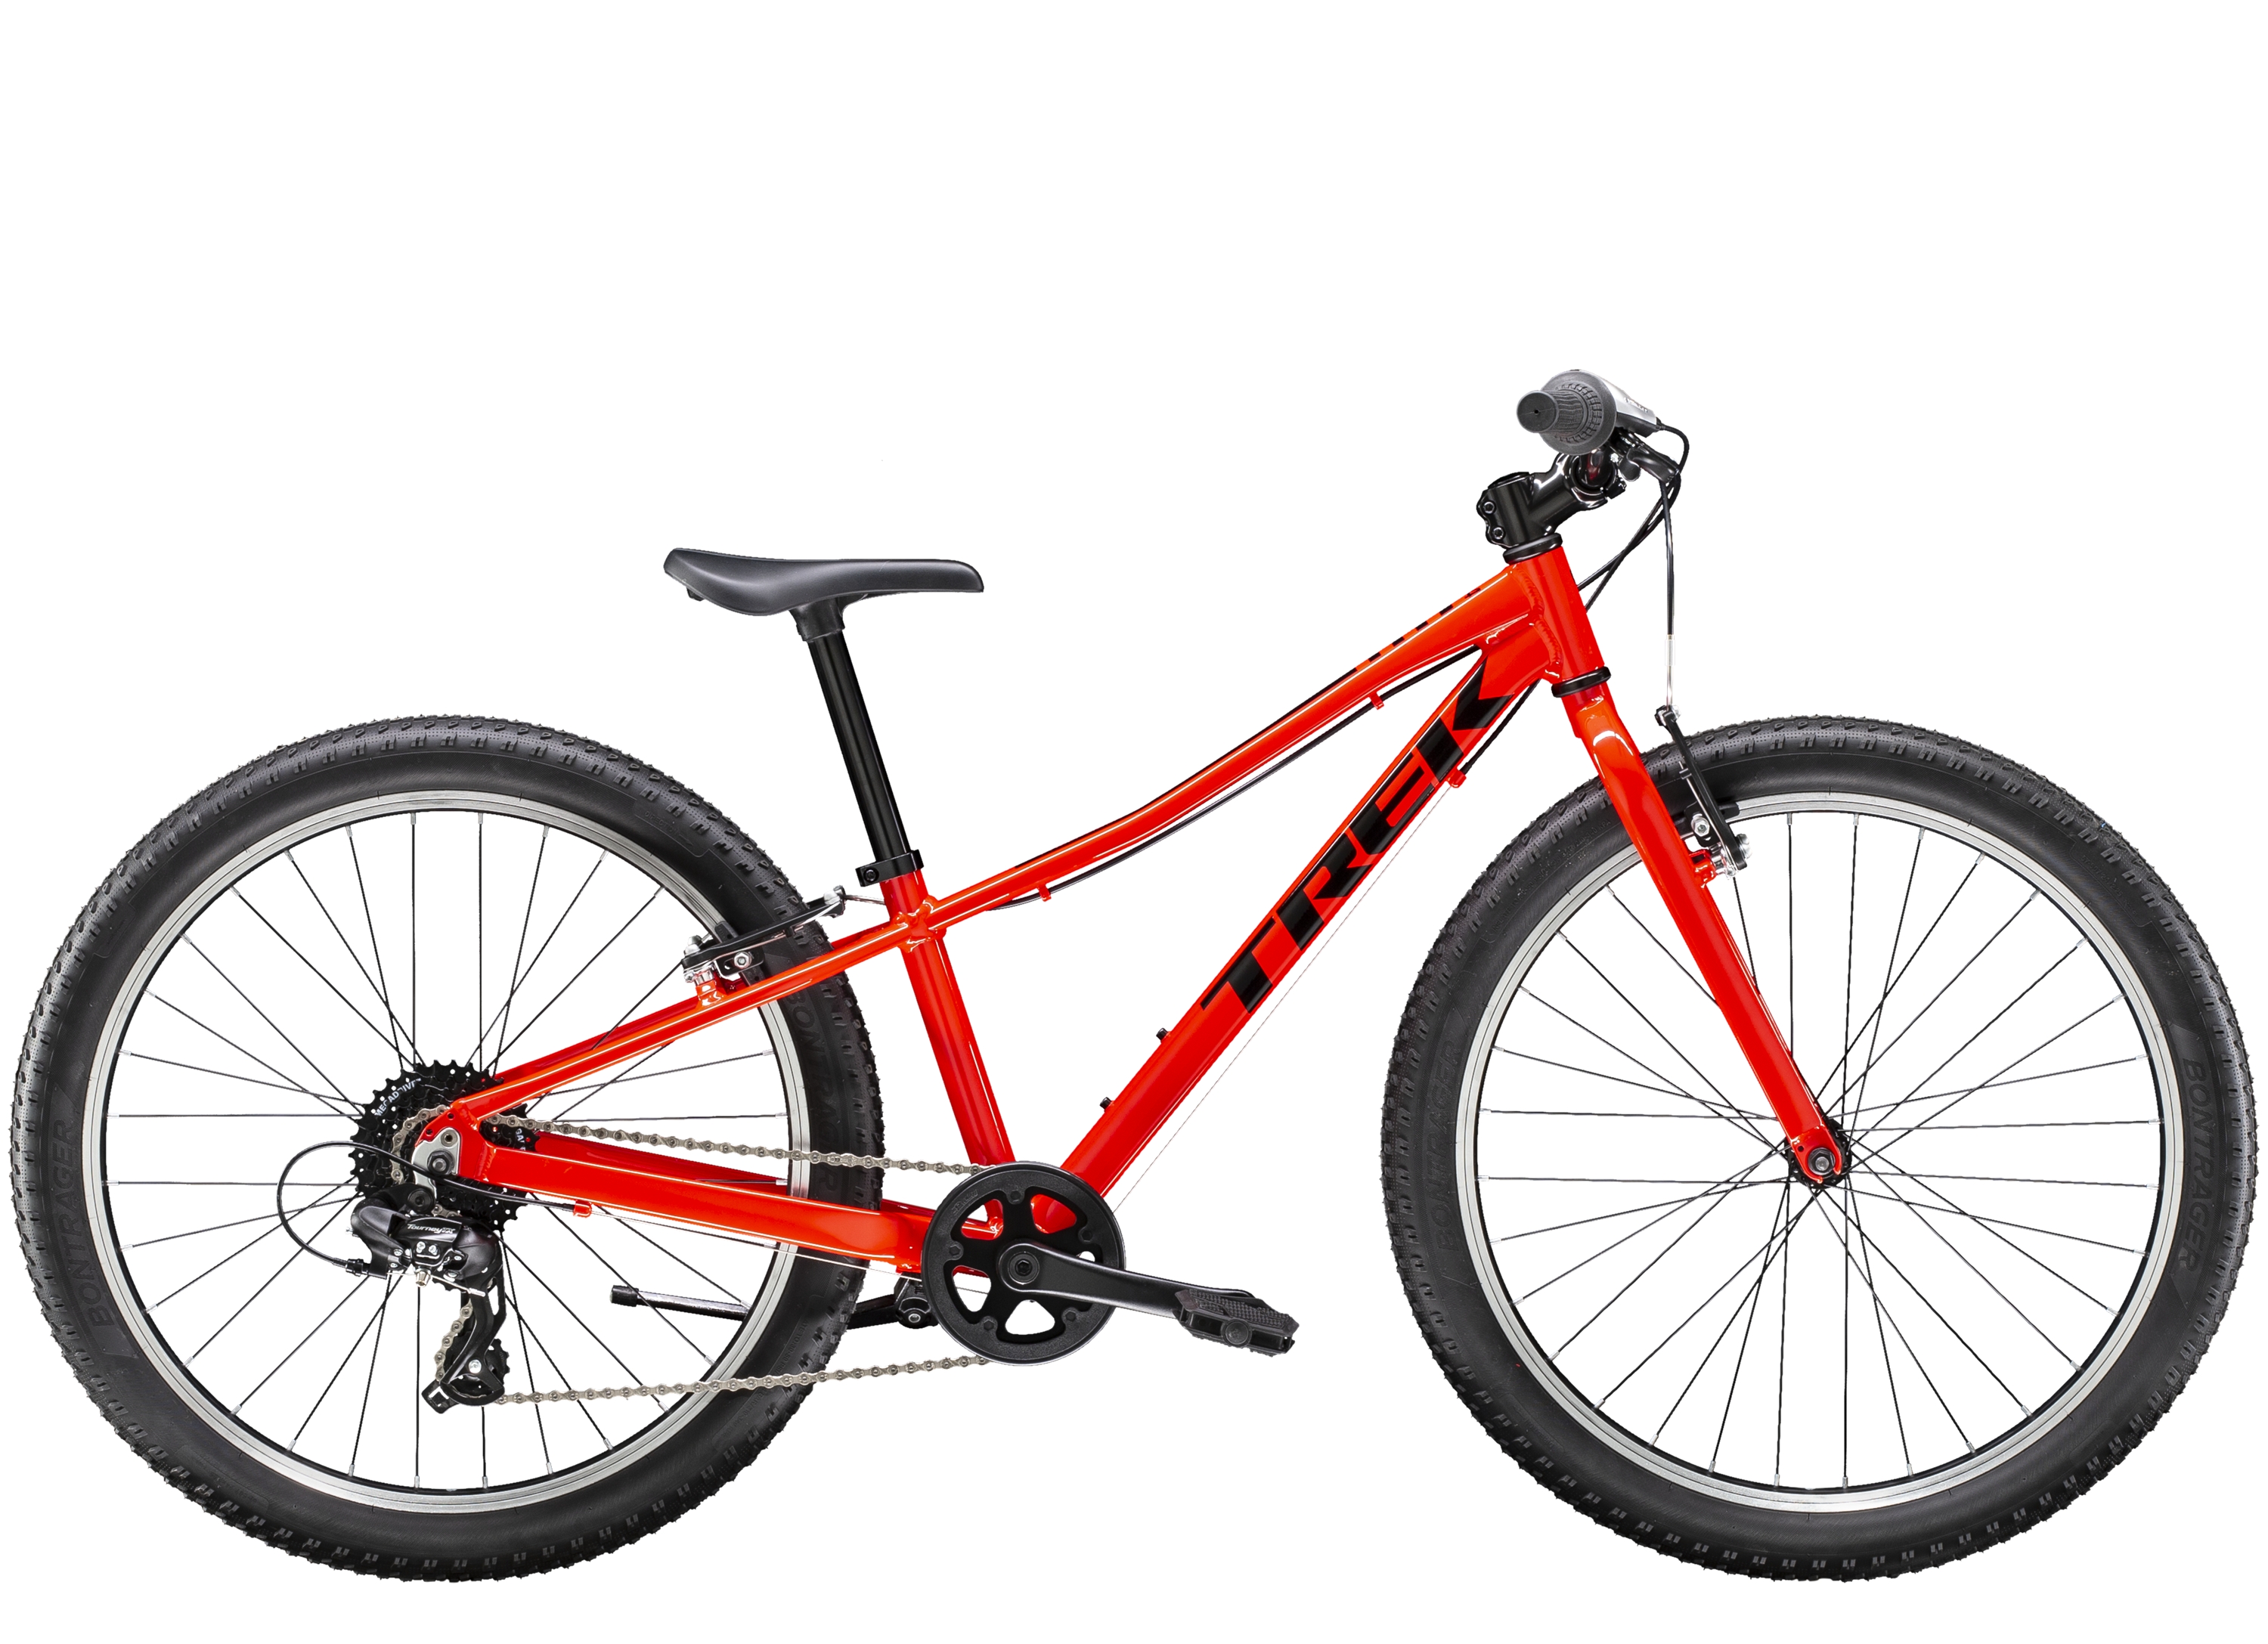 orange 24 inch bike